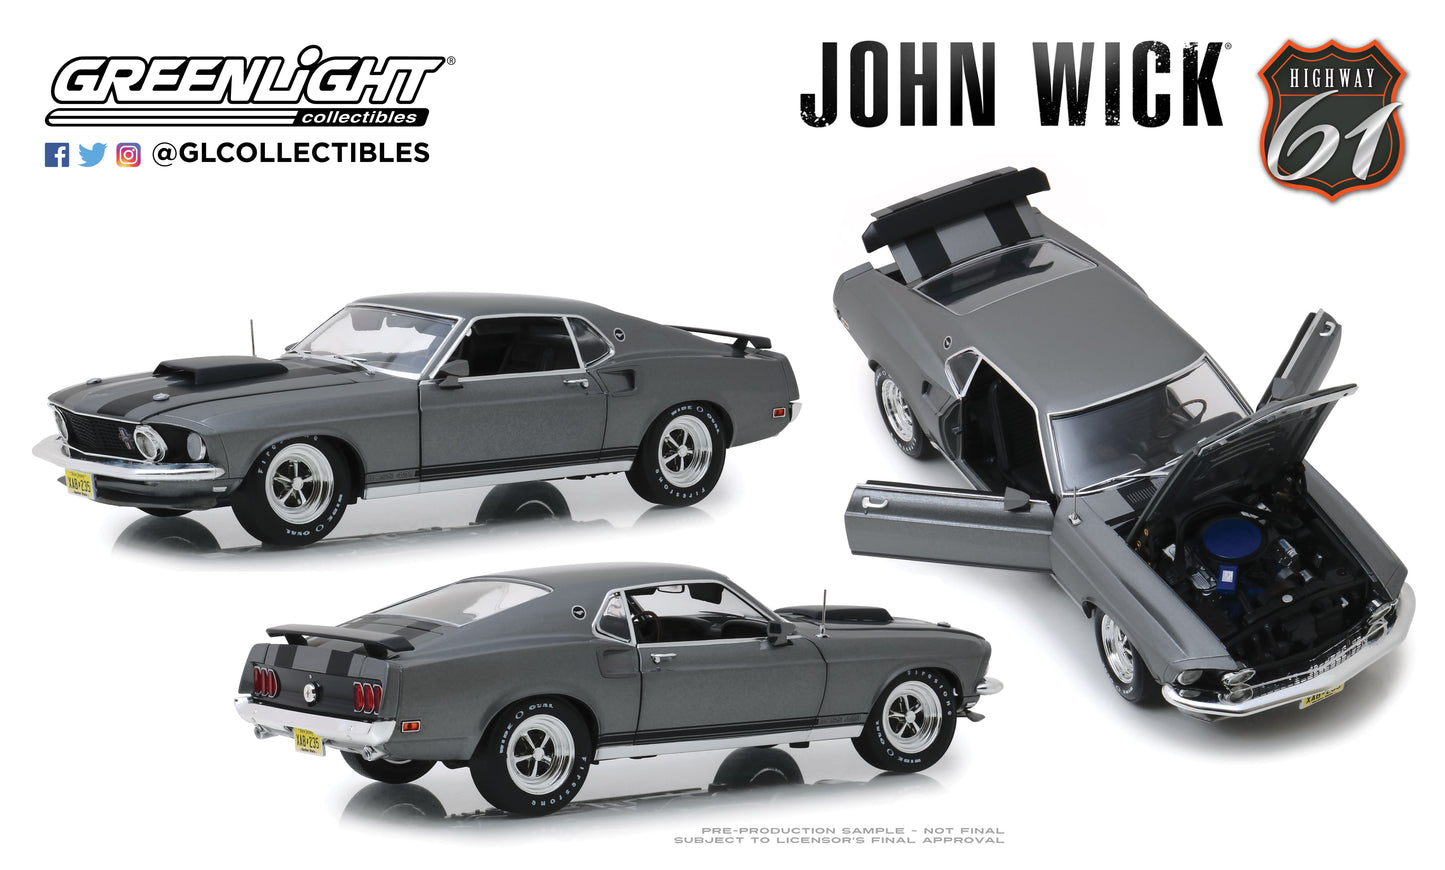 Highway 61 1969 Ford Mustang BOSS 429 - John Wick (2014)